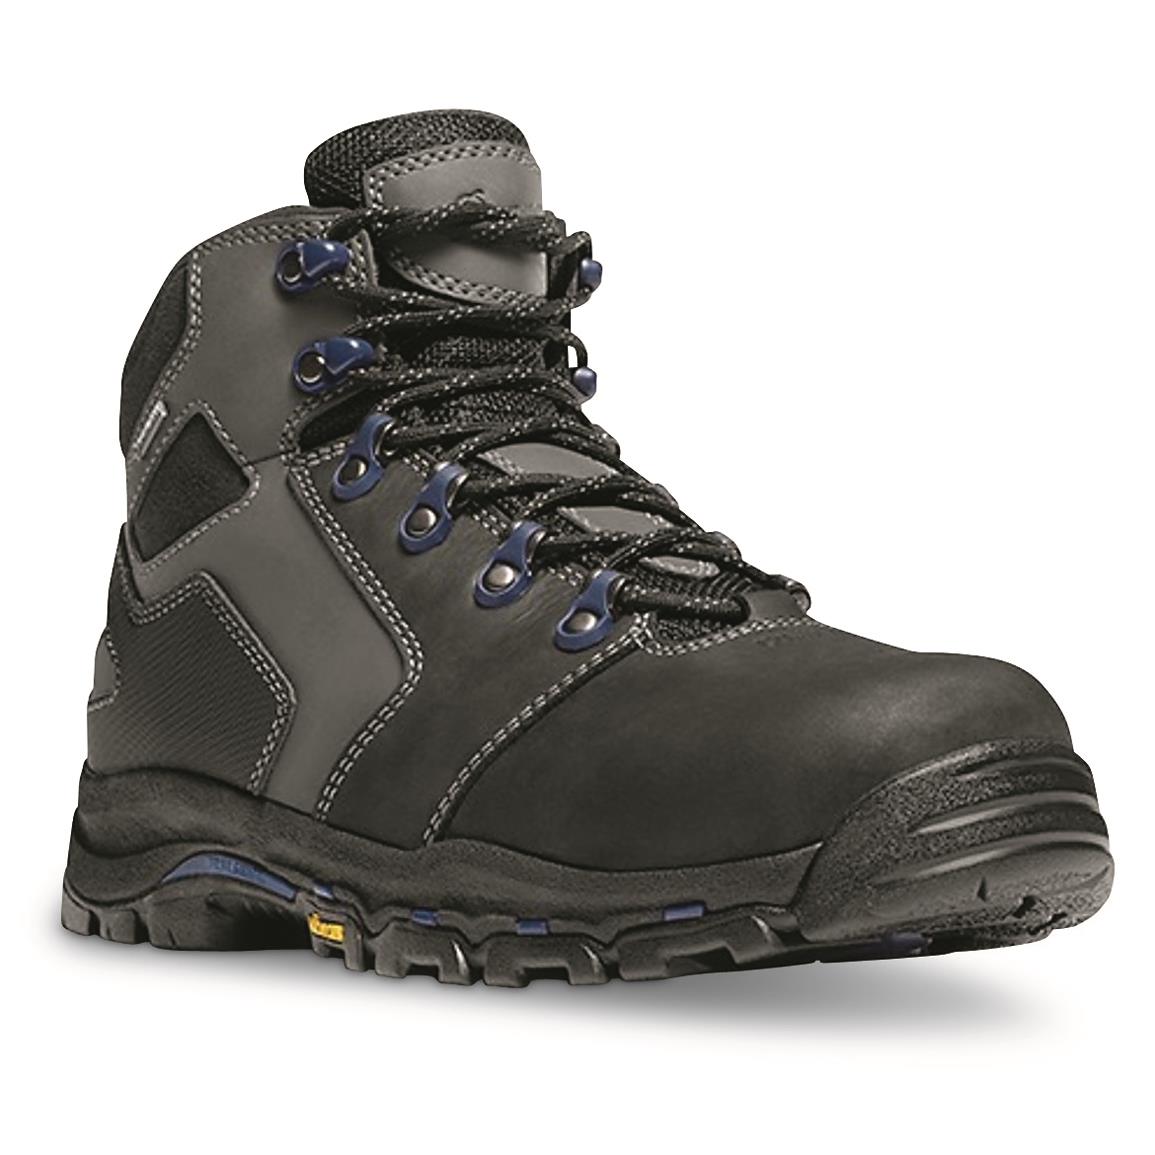 Danner Men's Vicious Waterproof 4.5" Safety Toe Work Boots, GORE-TEX, Black/Blue